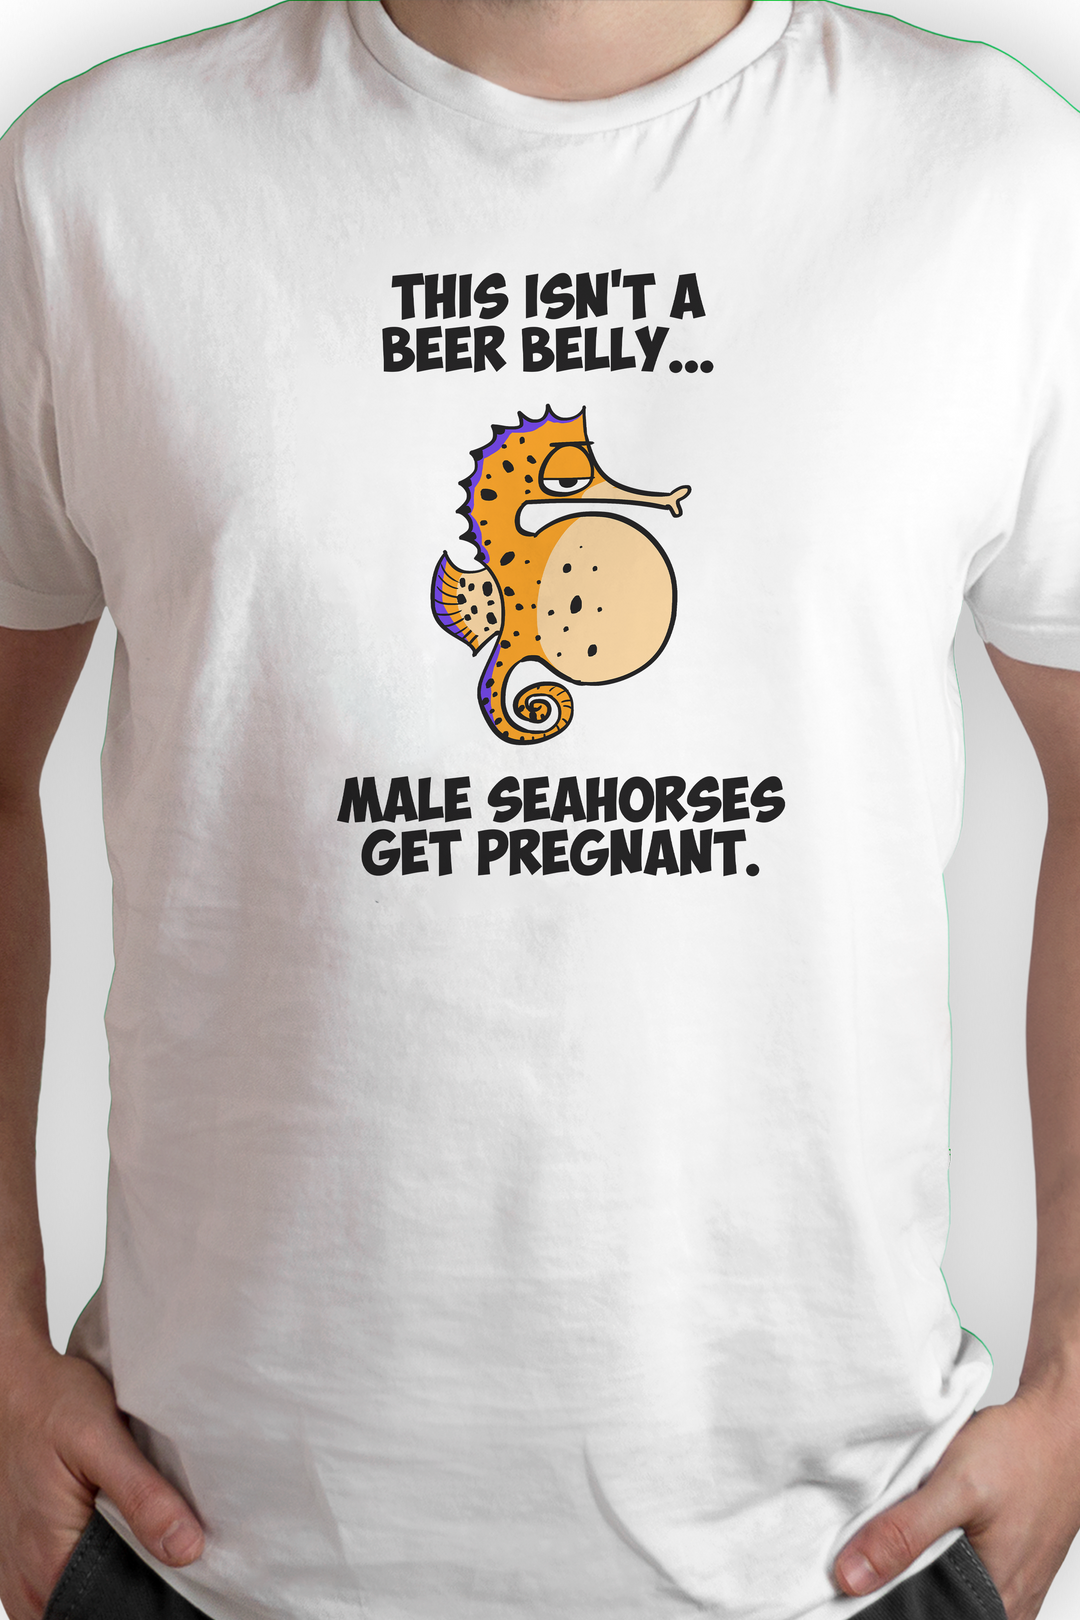 Pregnant Seahorses T-Shirt